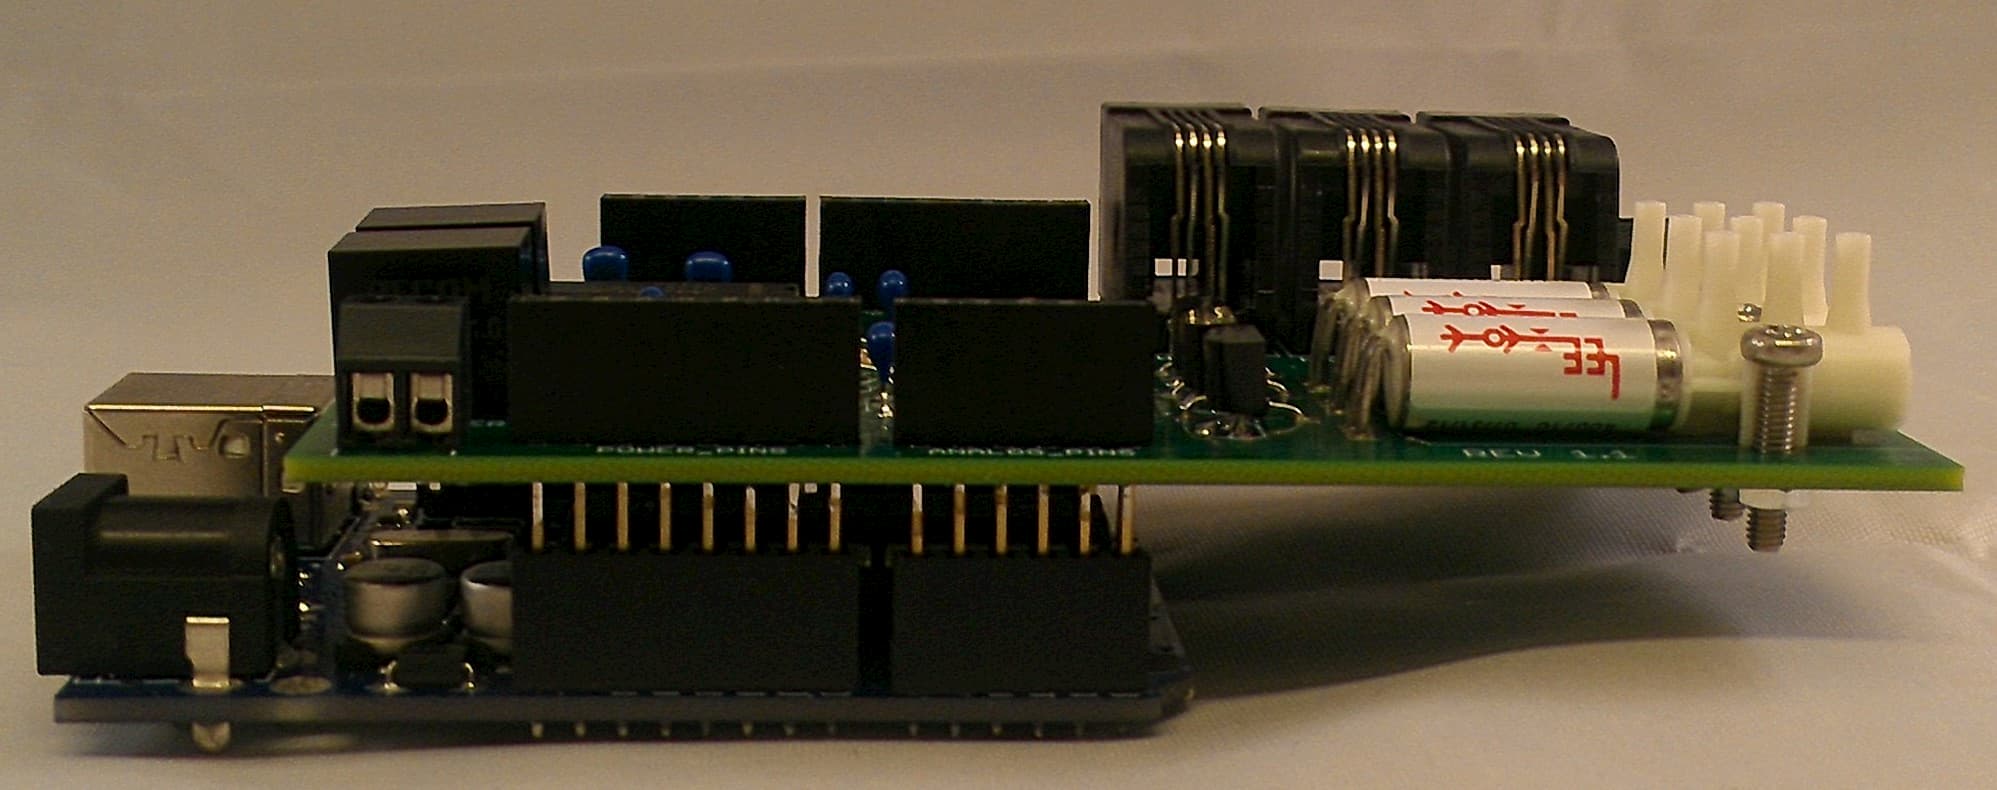 Plugs into an Arduino as a shield